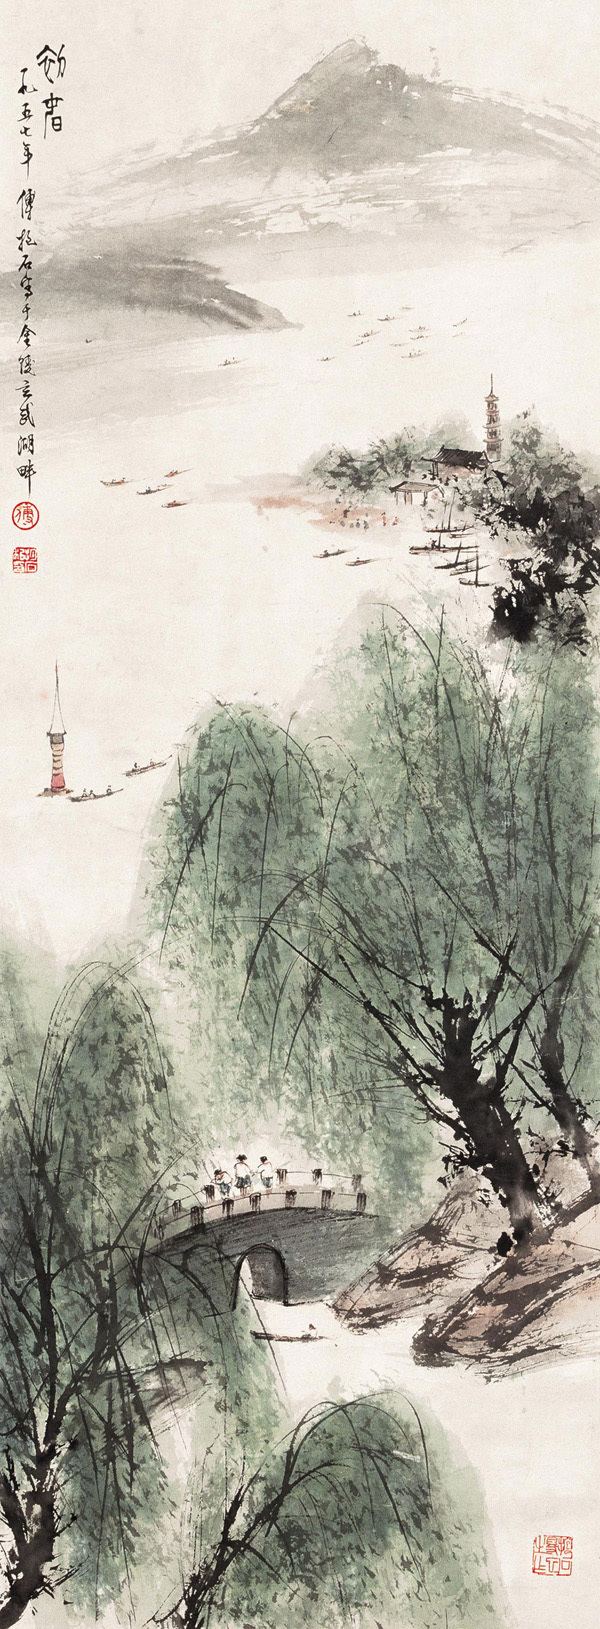 Fu Baoshi Fu Baoshi Paintings Chinese Art Gallery China Online